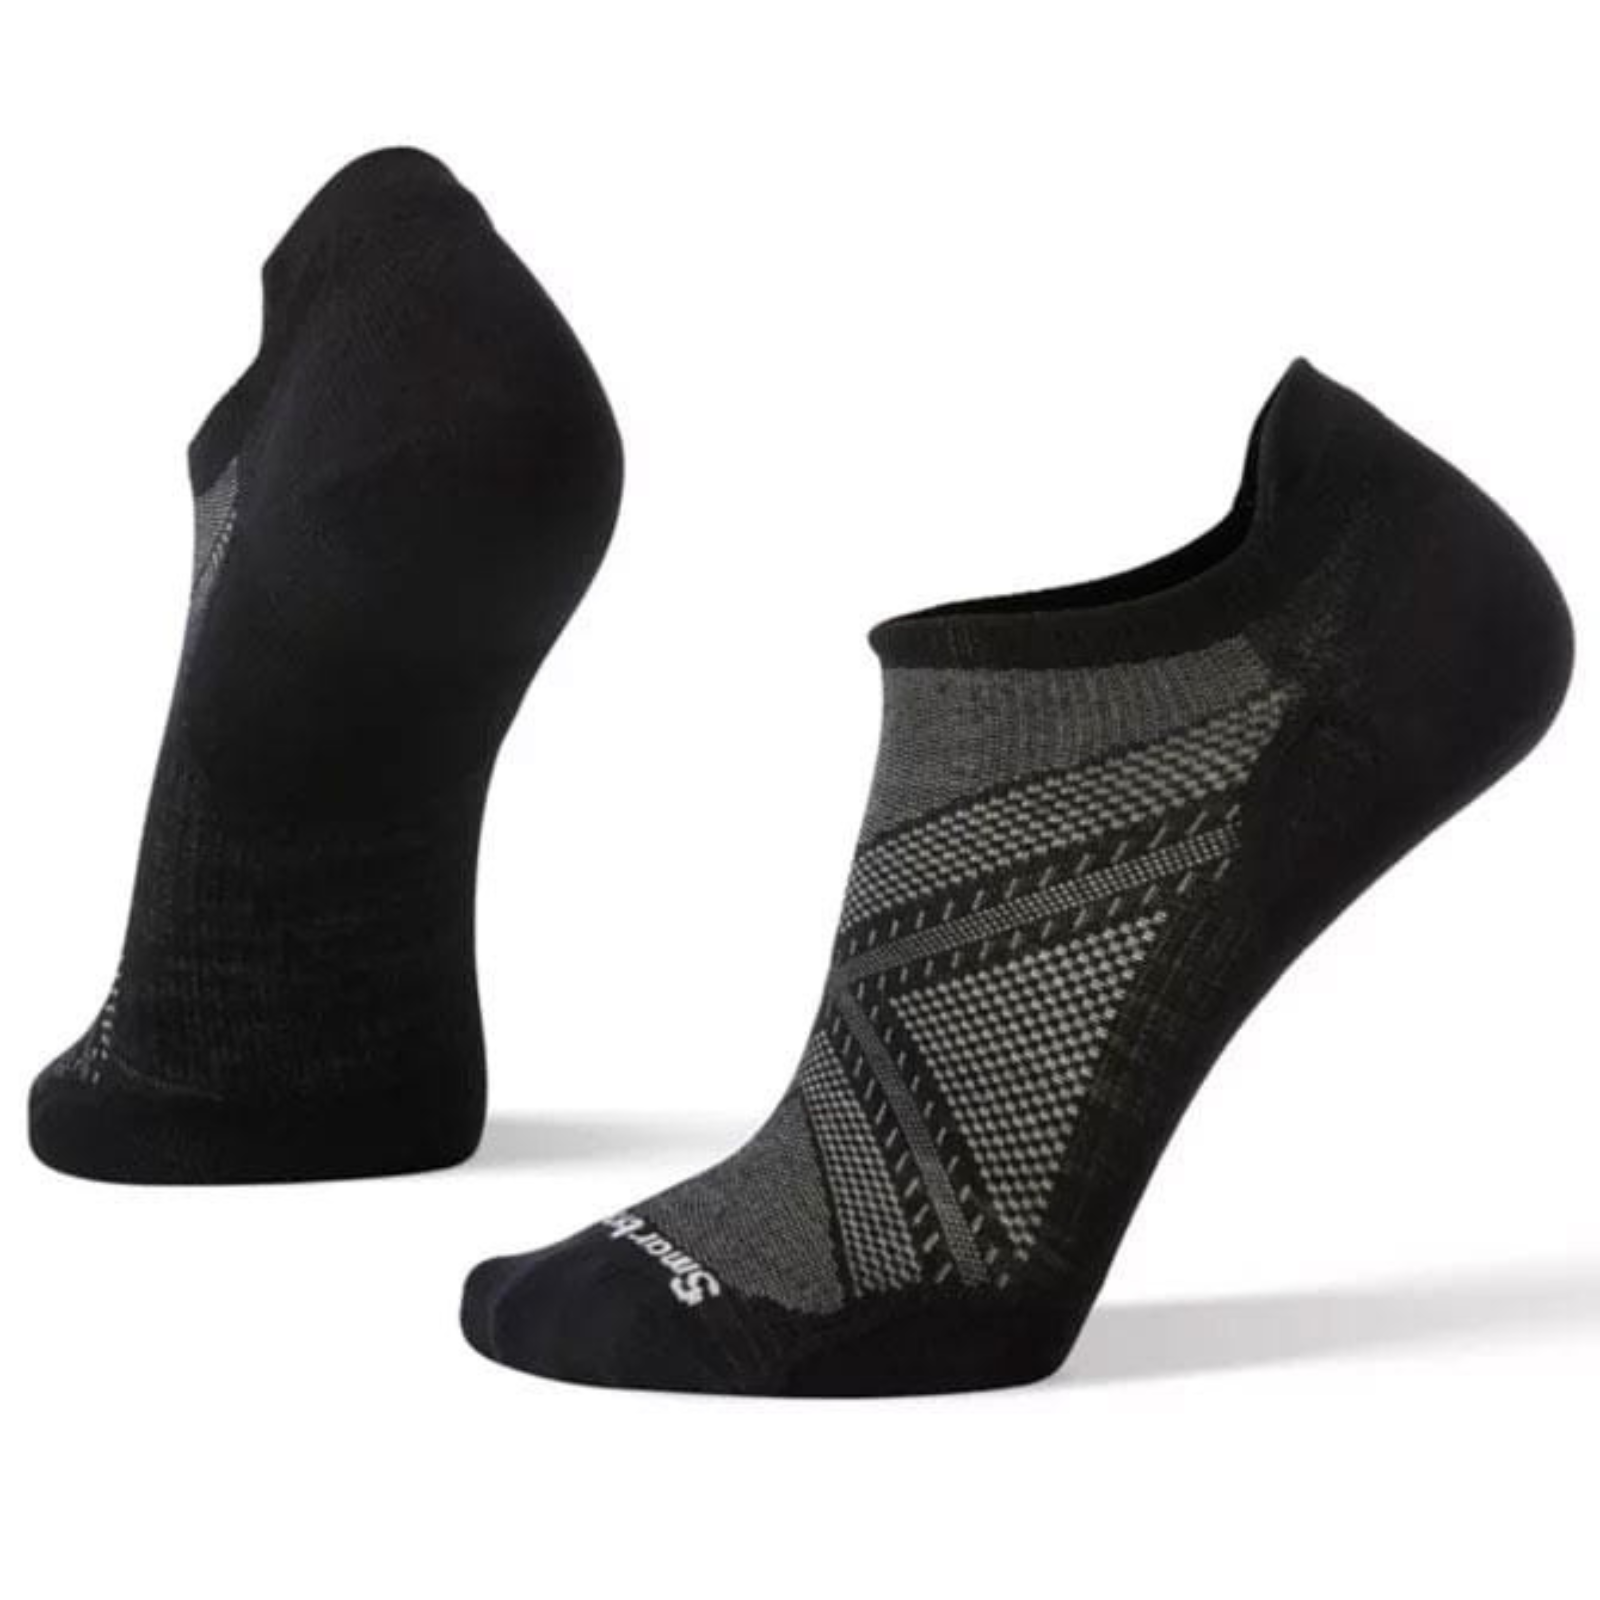 Smartwool Run Zero Cushion Low Ankle men's sock featuring black sock shown on display feet.